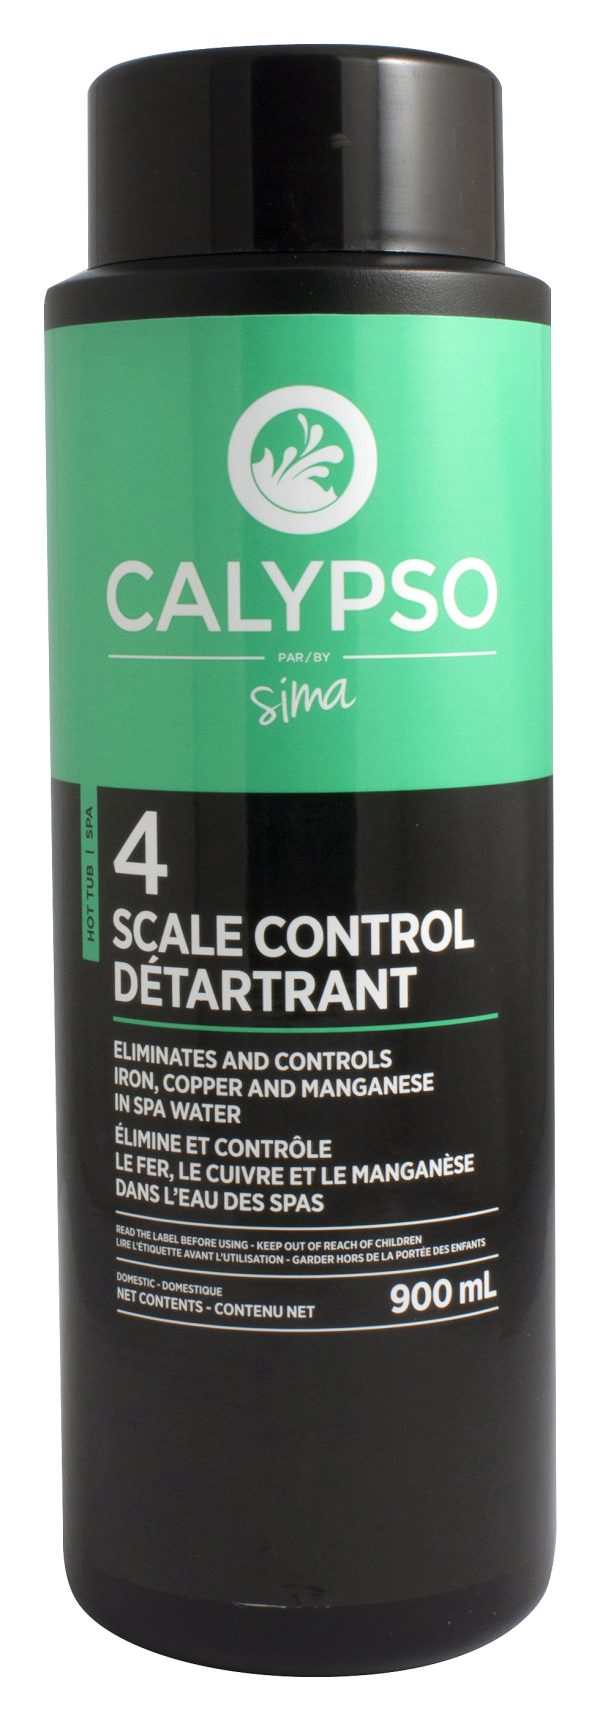 Calypso Détartrant #4 900ML - Spa products - Spa maintenance - Sima POOLS & SPAS